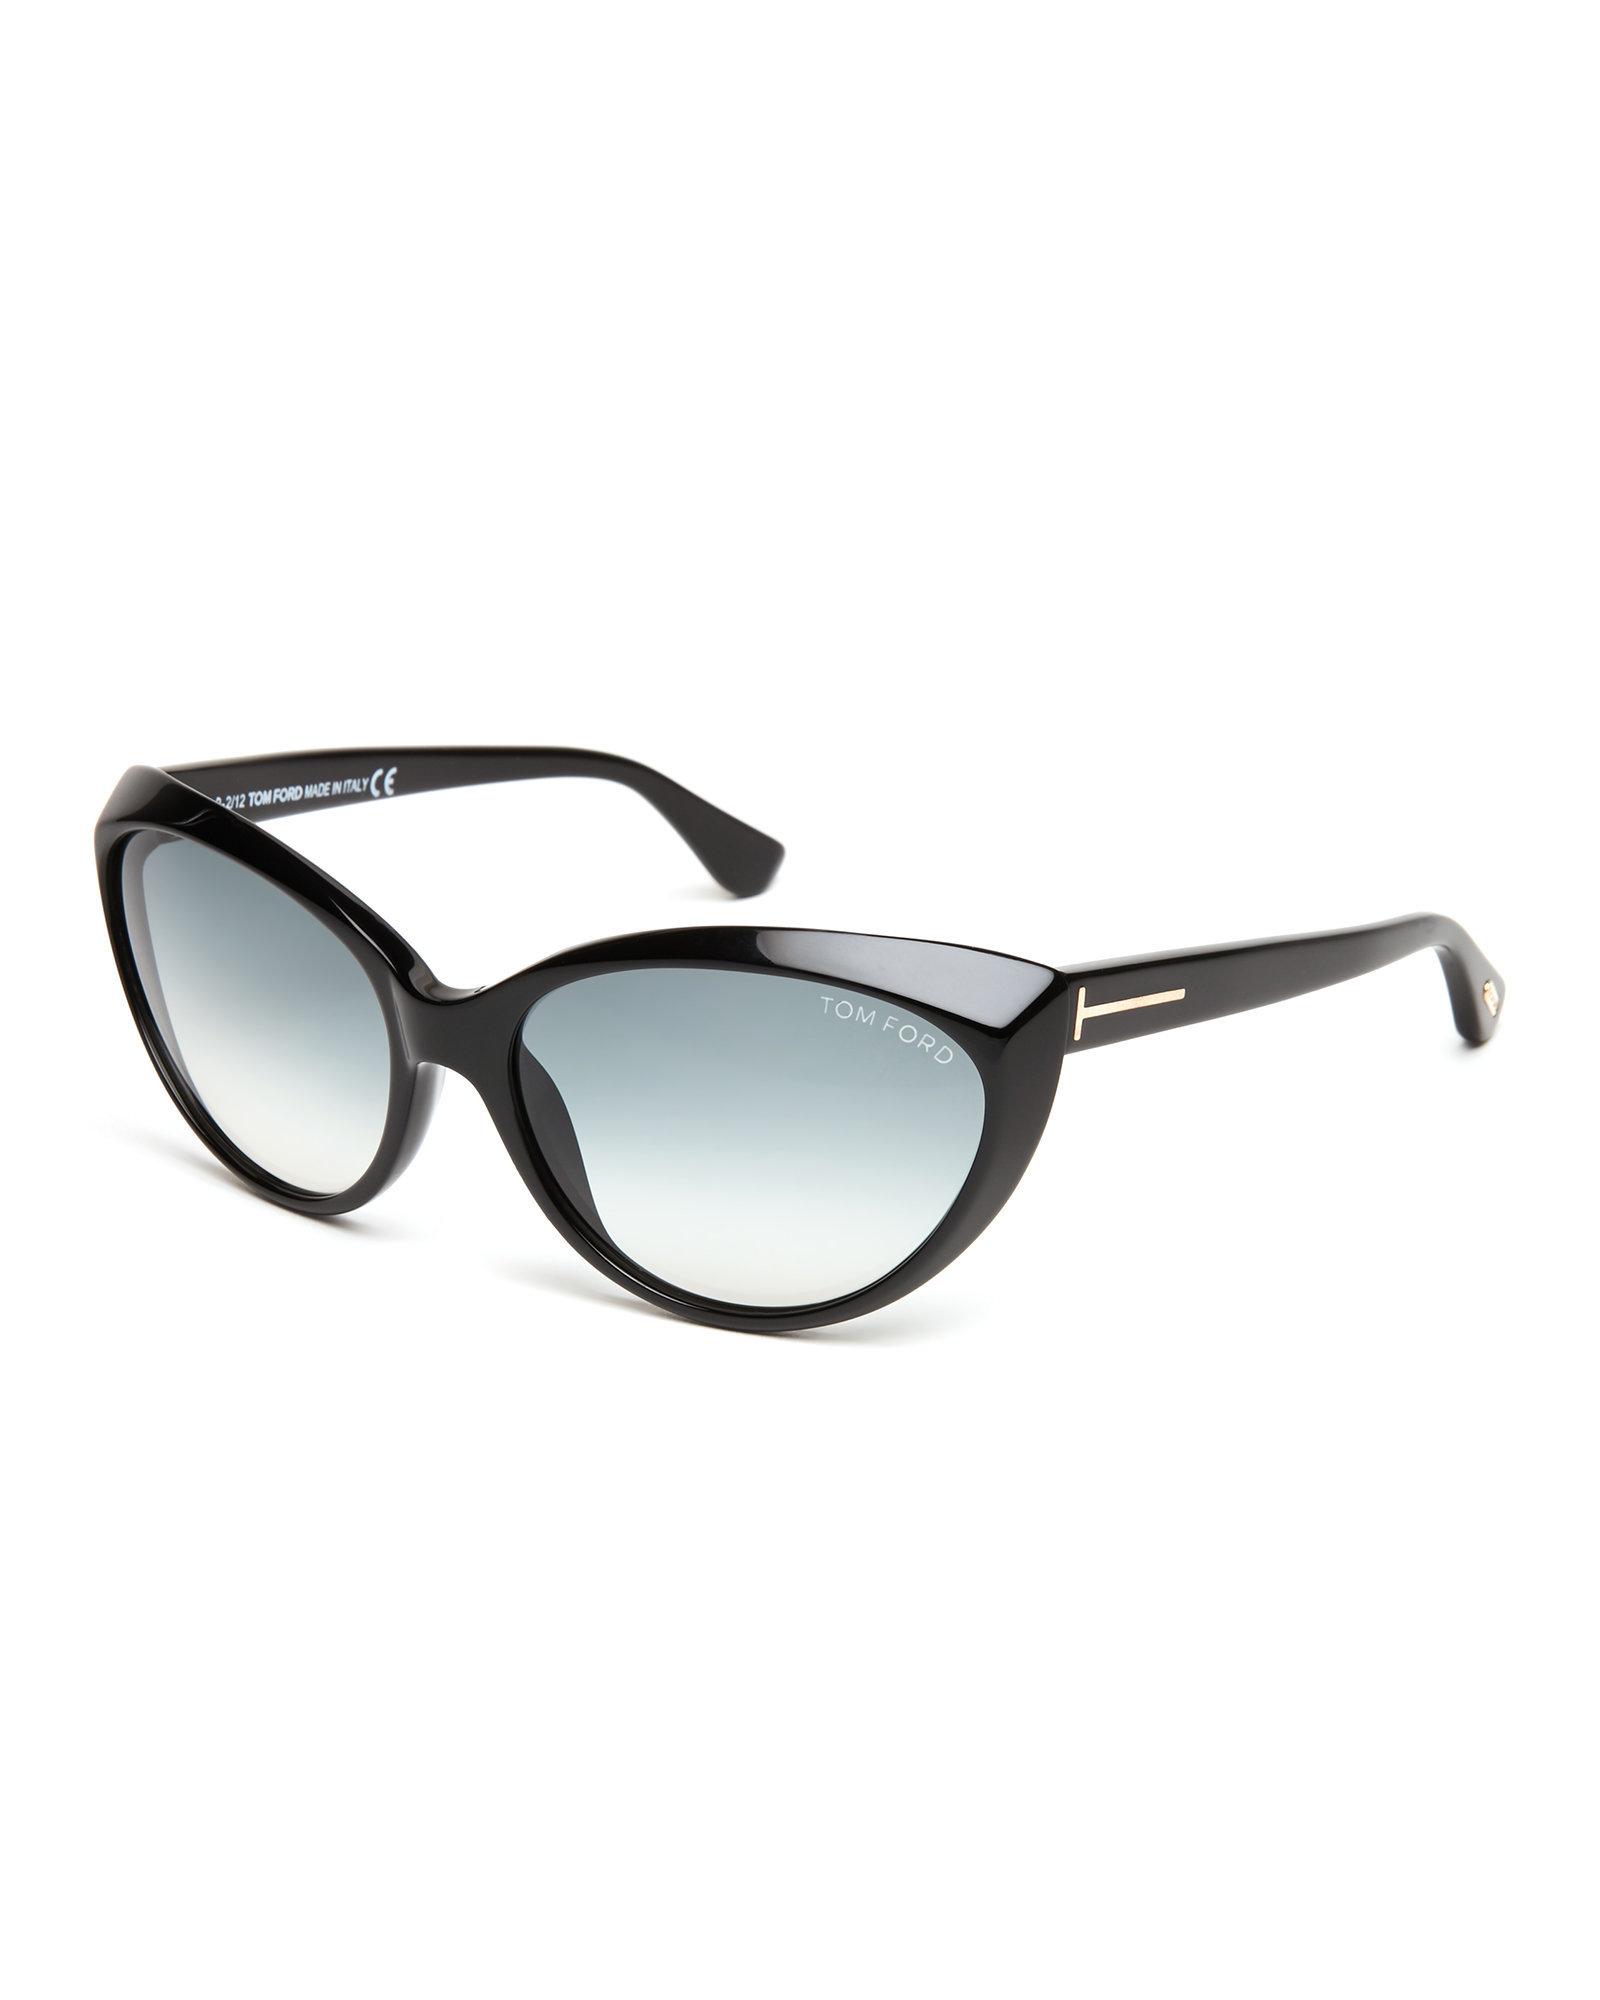 Lyst - Tom Ford Black Martina Tf231 Cat Eye Sunglasses in Black